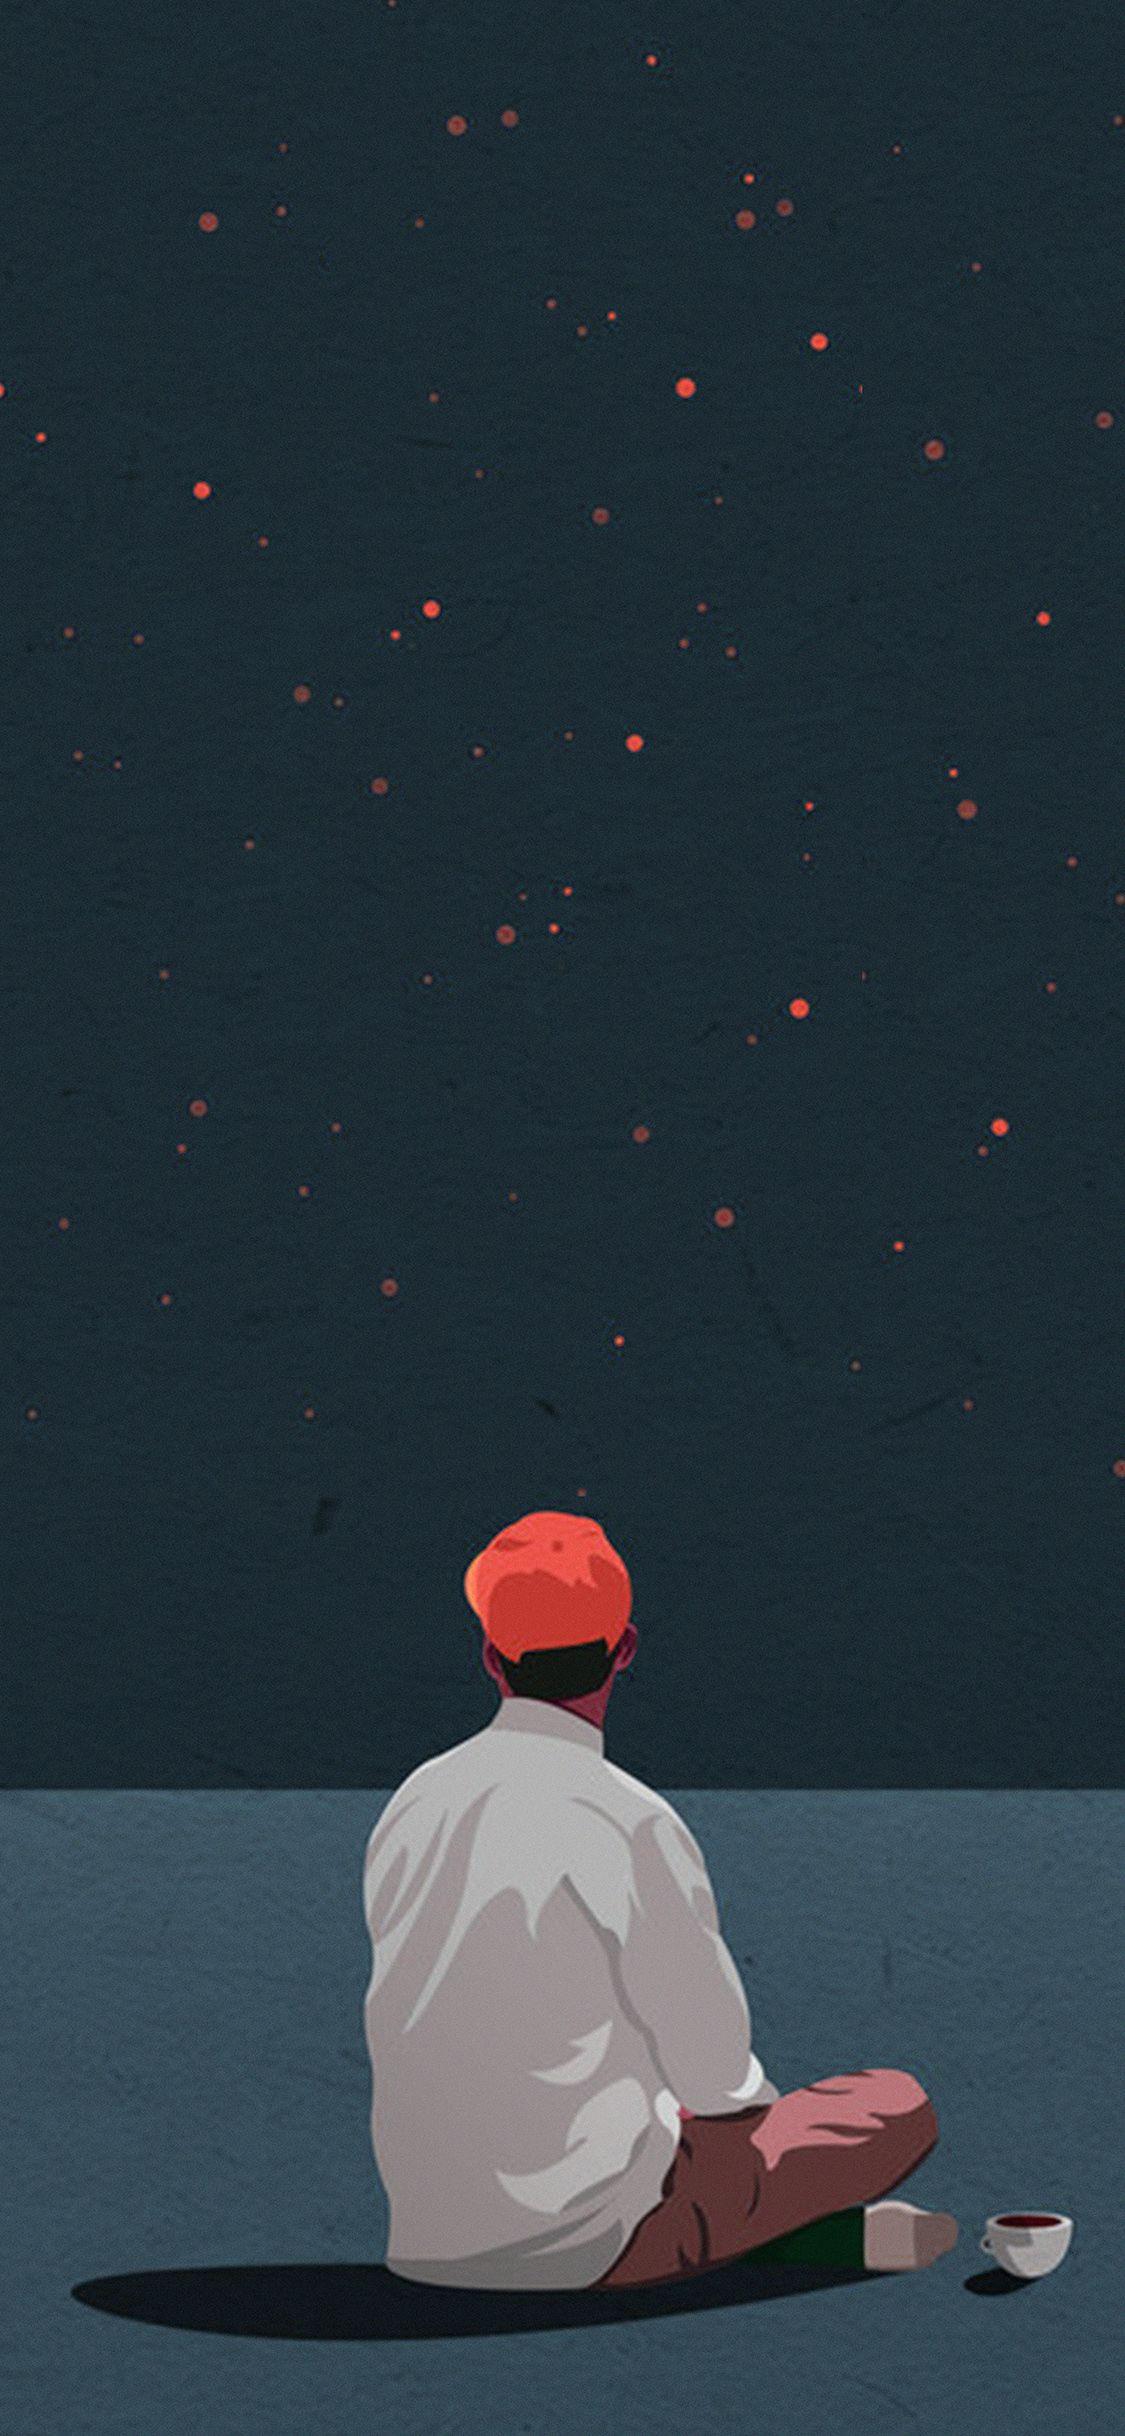 iPhoneX wallpaper: coffee boy cover illustration art red